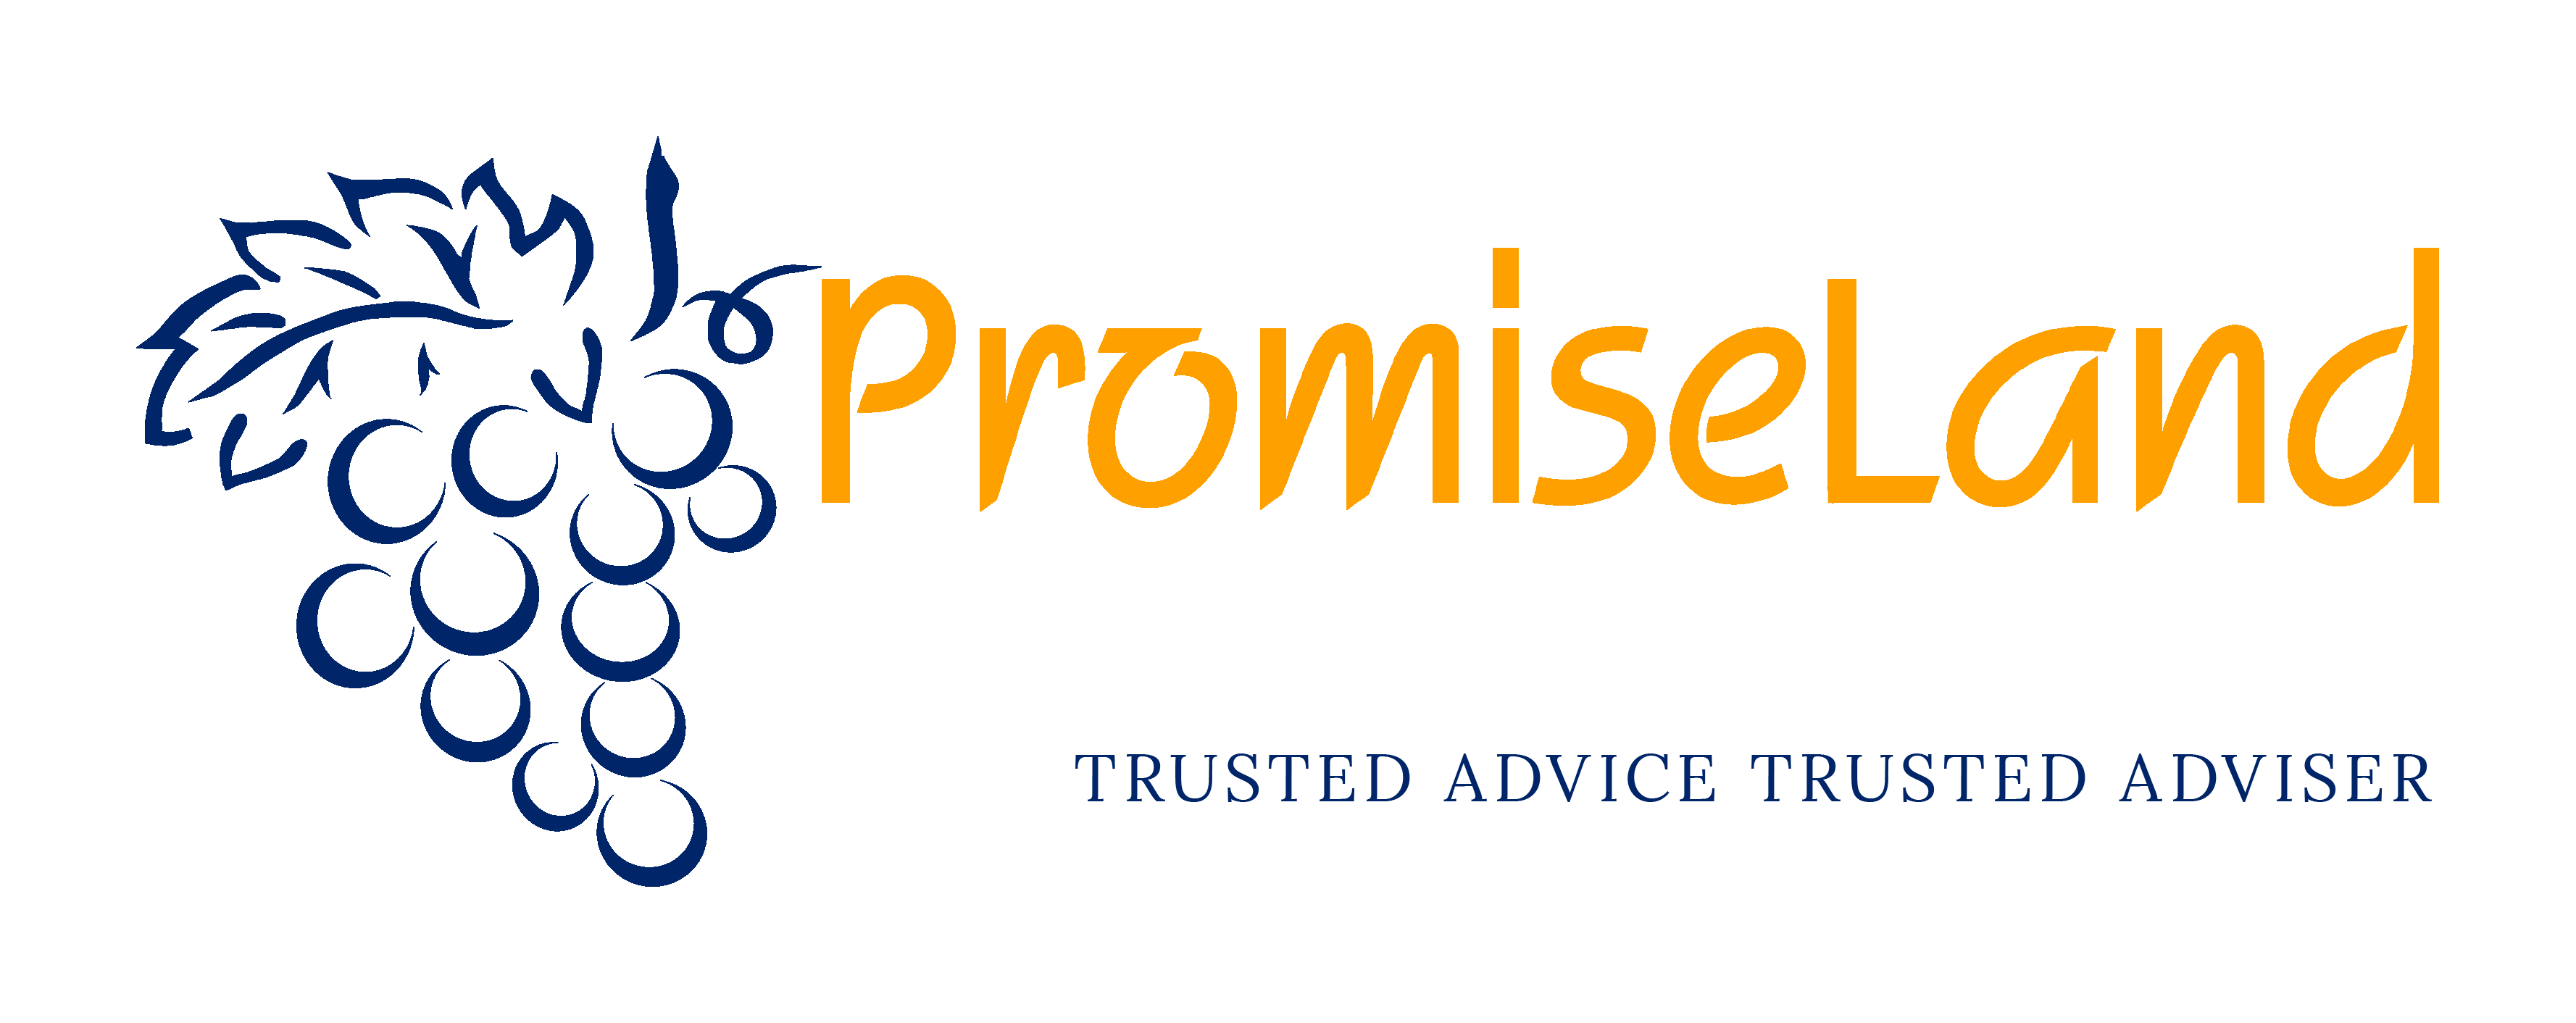 Promiseland Logo